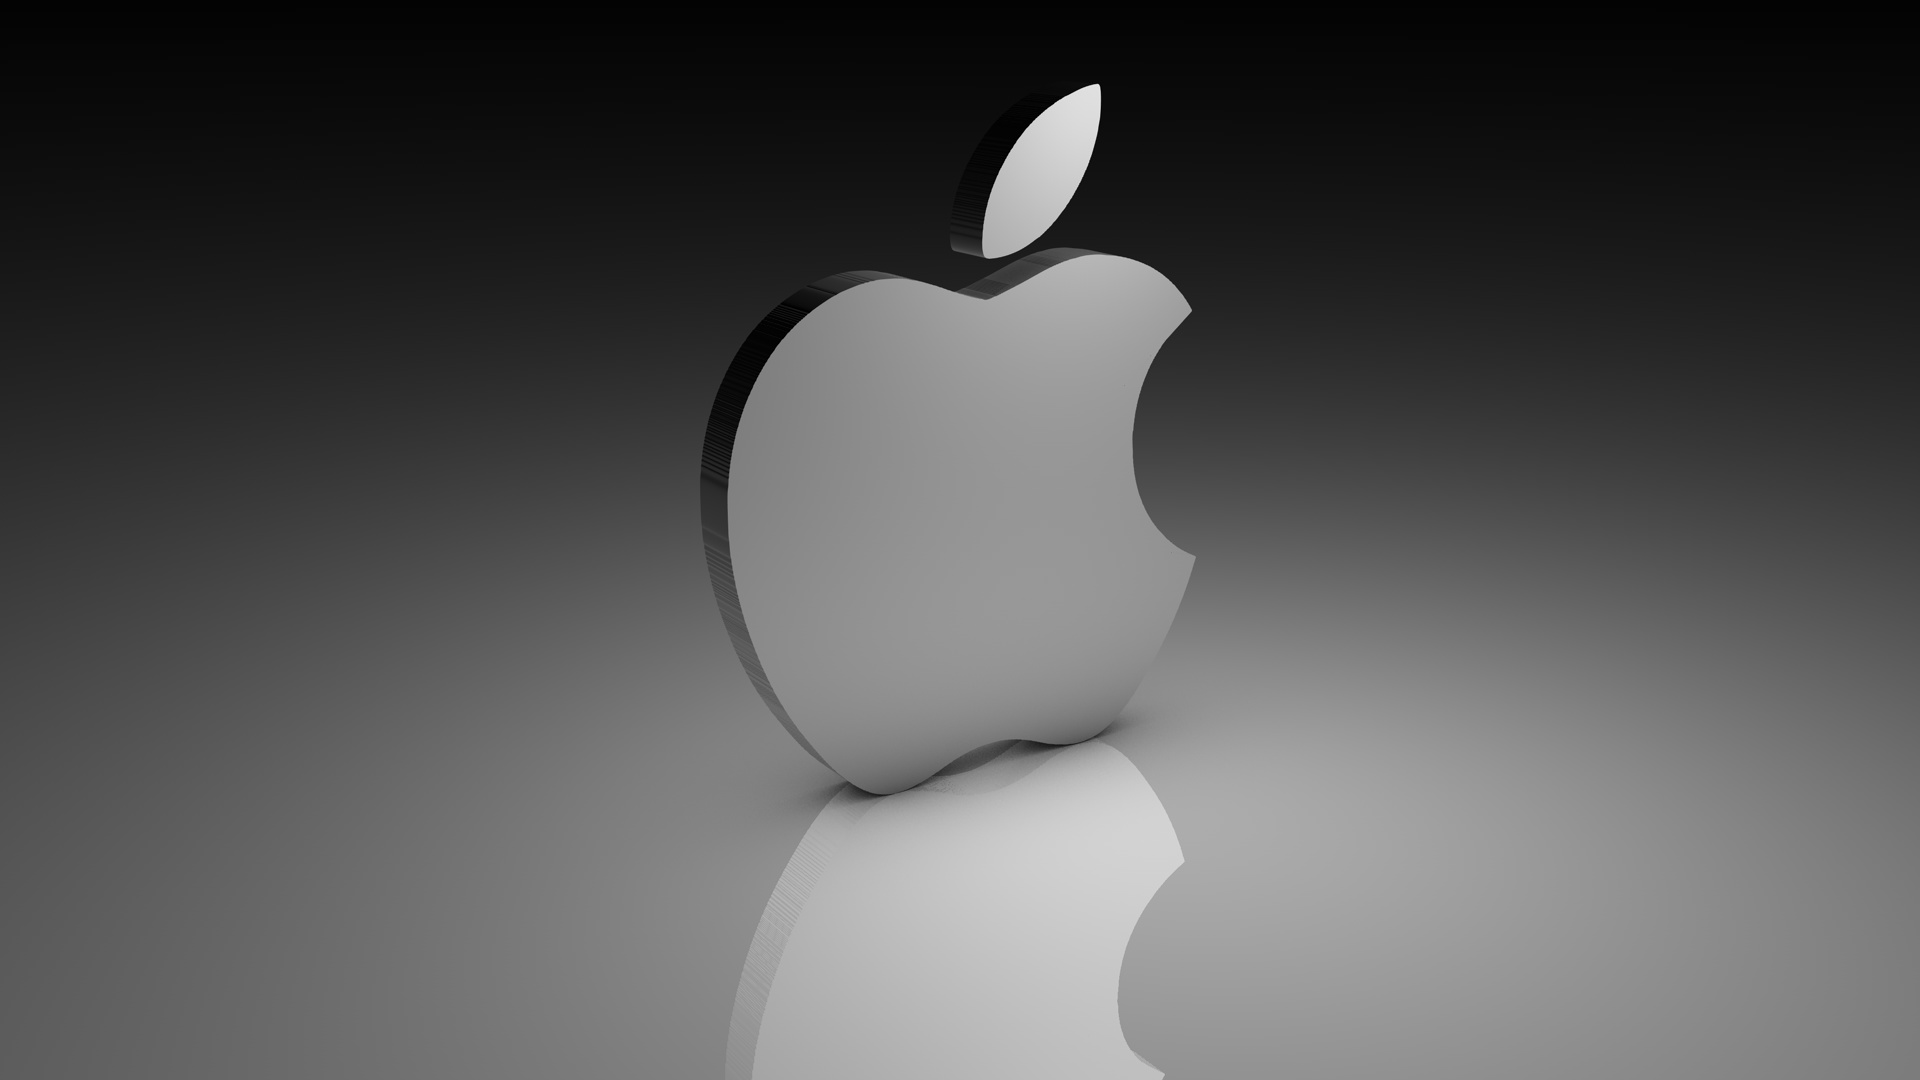 Apple Logo Images Hd - HD Wallpaper 